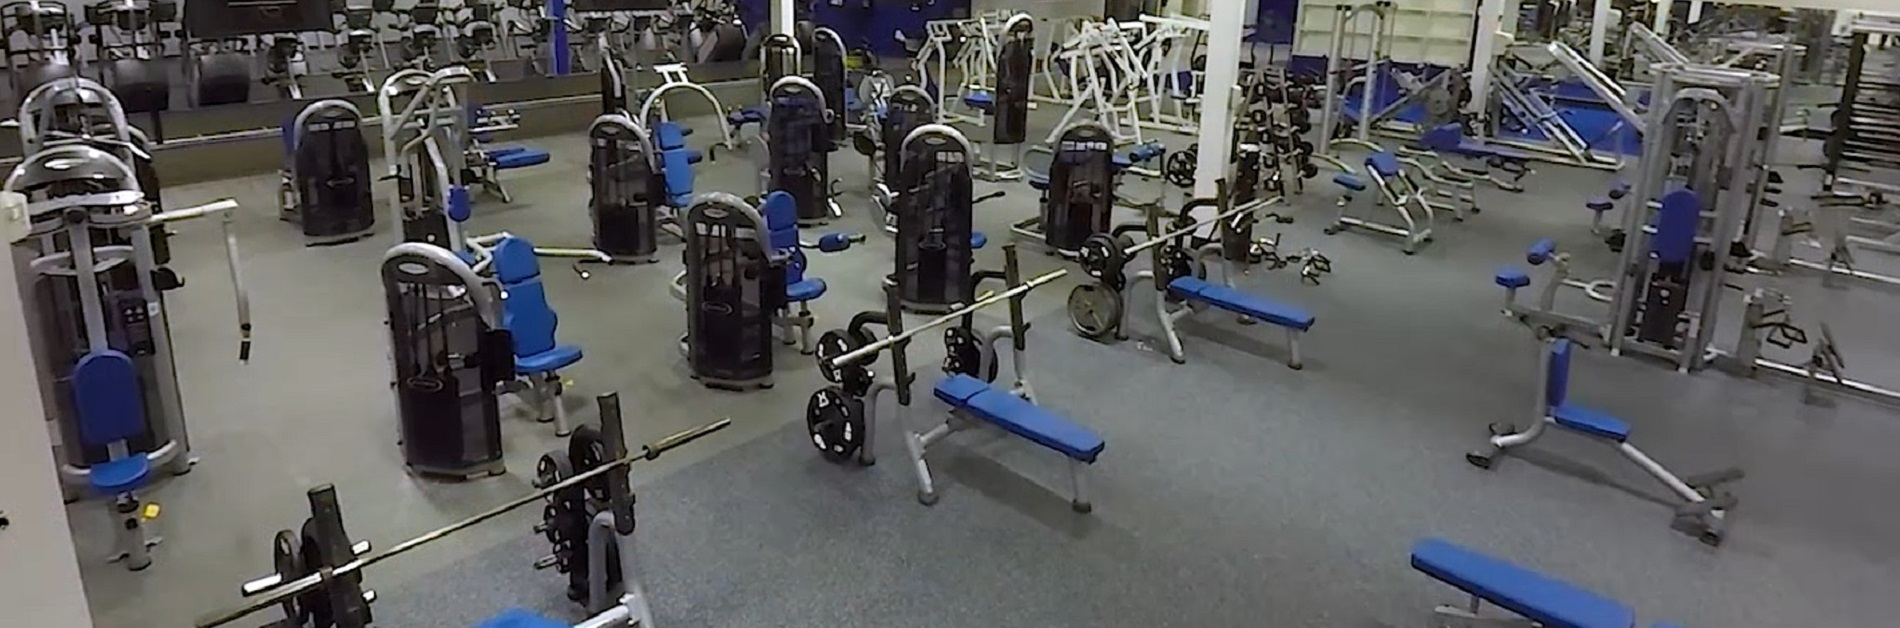 Workout Gym Facility in Hooksett NH - Meet your 2022 Fitness Goals! | Express  Fitness